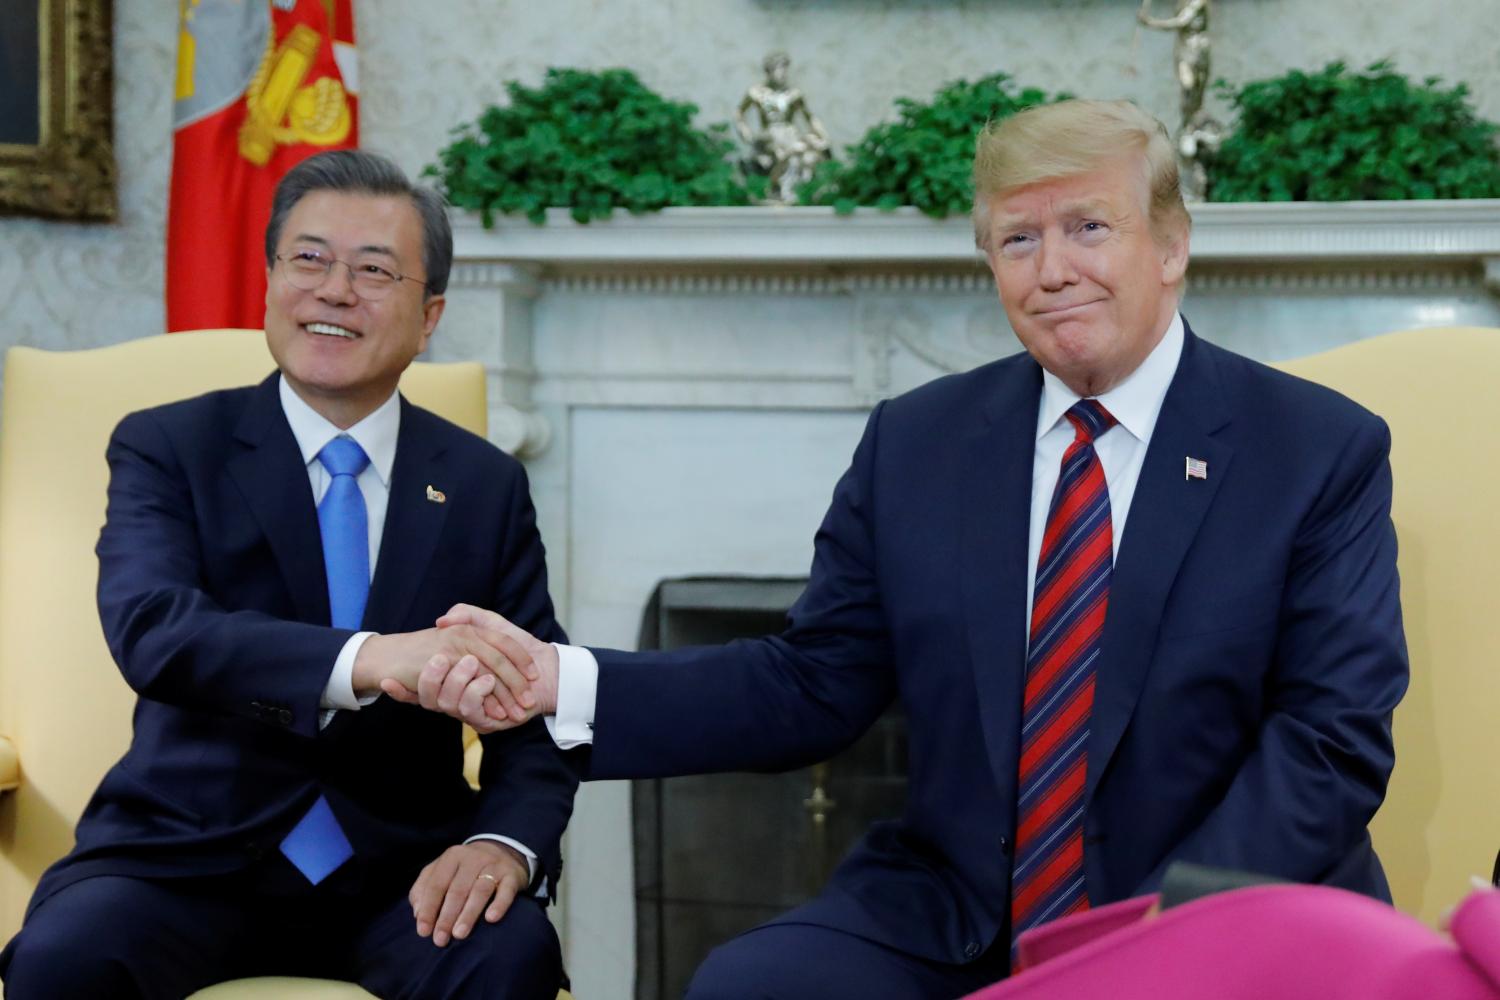 U.S. President Donald Trump greets South Koreas President Moon Jae-in inside the Oval Office at the White House in Washington, U.S., April 11, 2019. REUTERS/Carlos Barria - RC1DADDF4F50